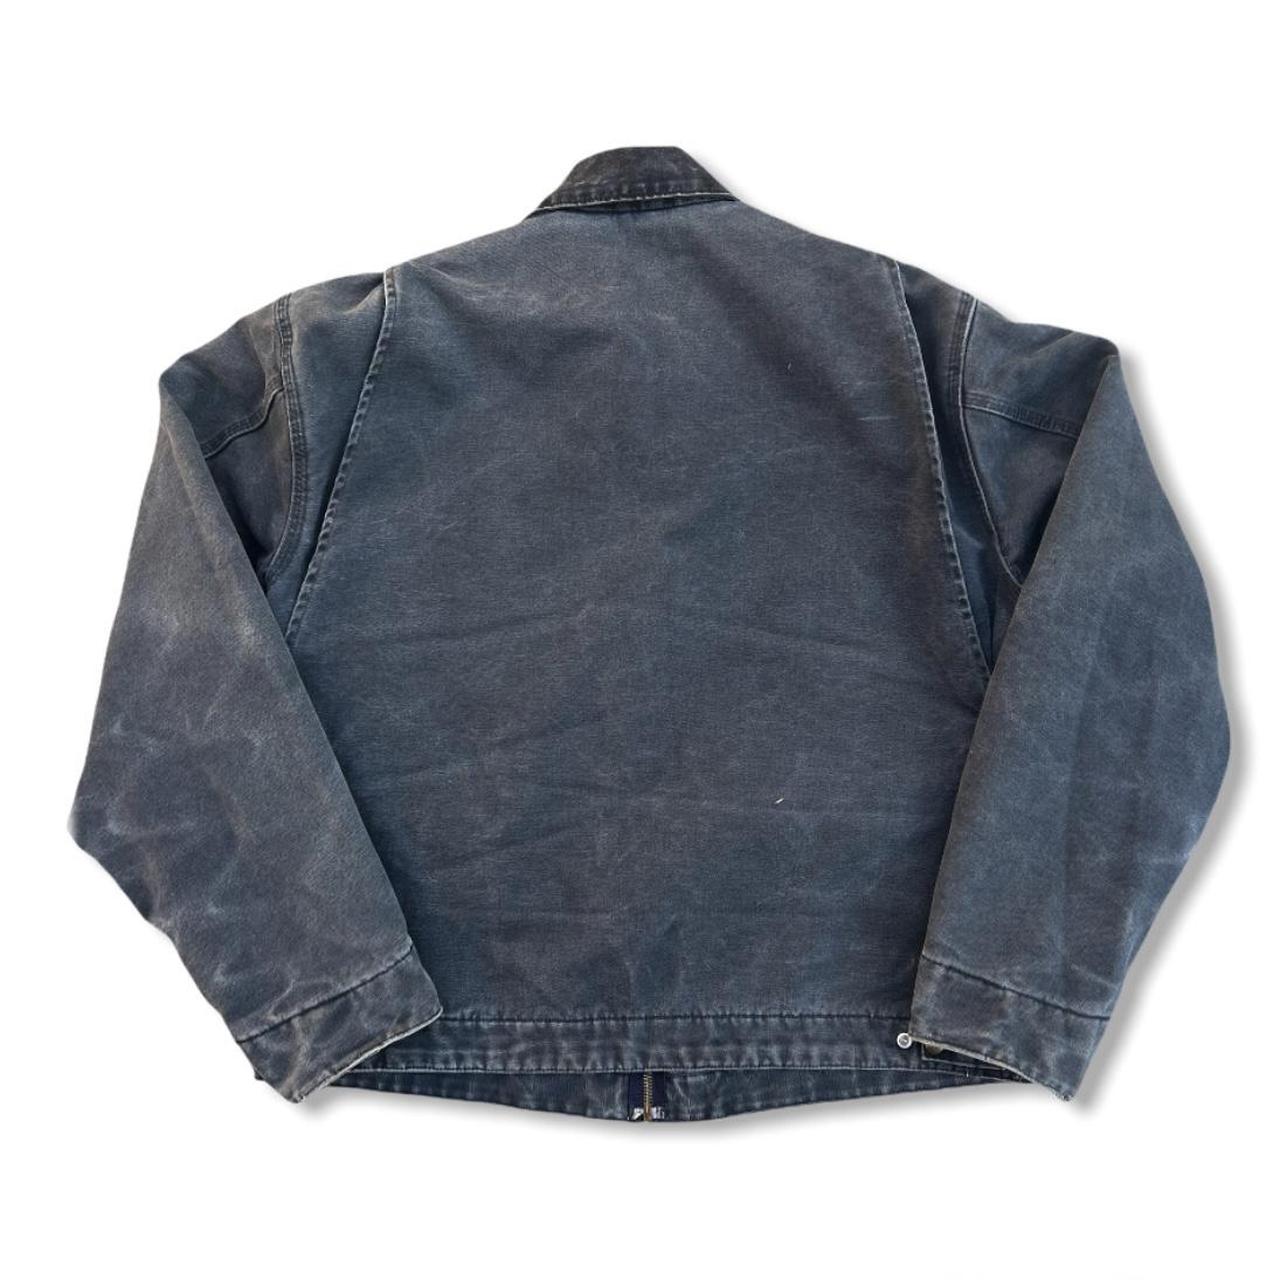 Product Image 3 - Vintage Carhartt Jacket
• Blanket Lined,